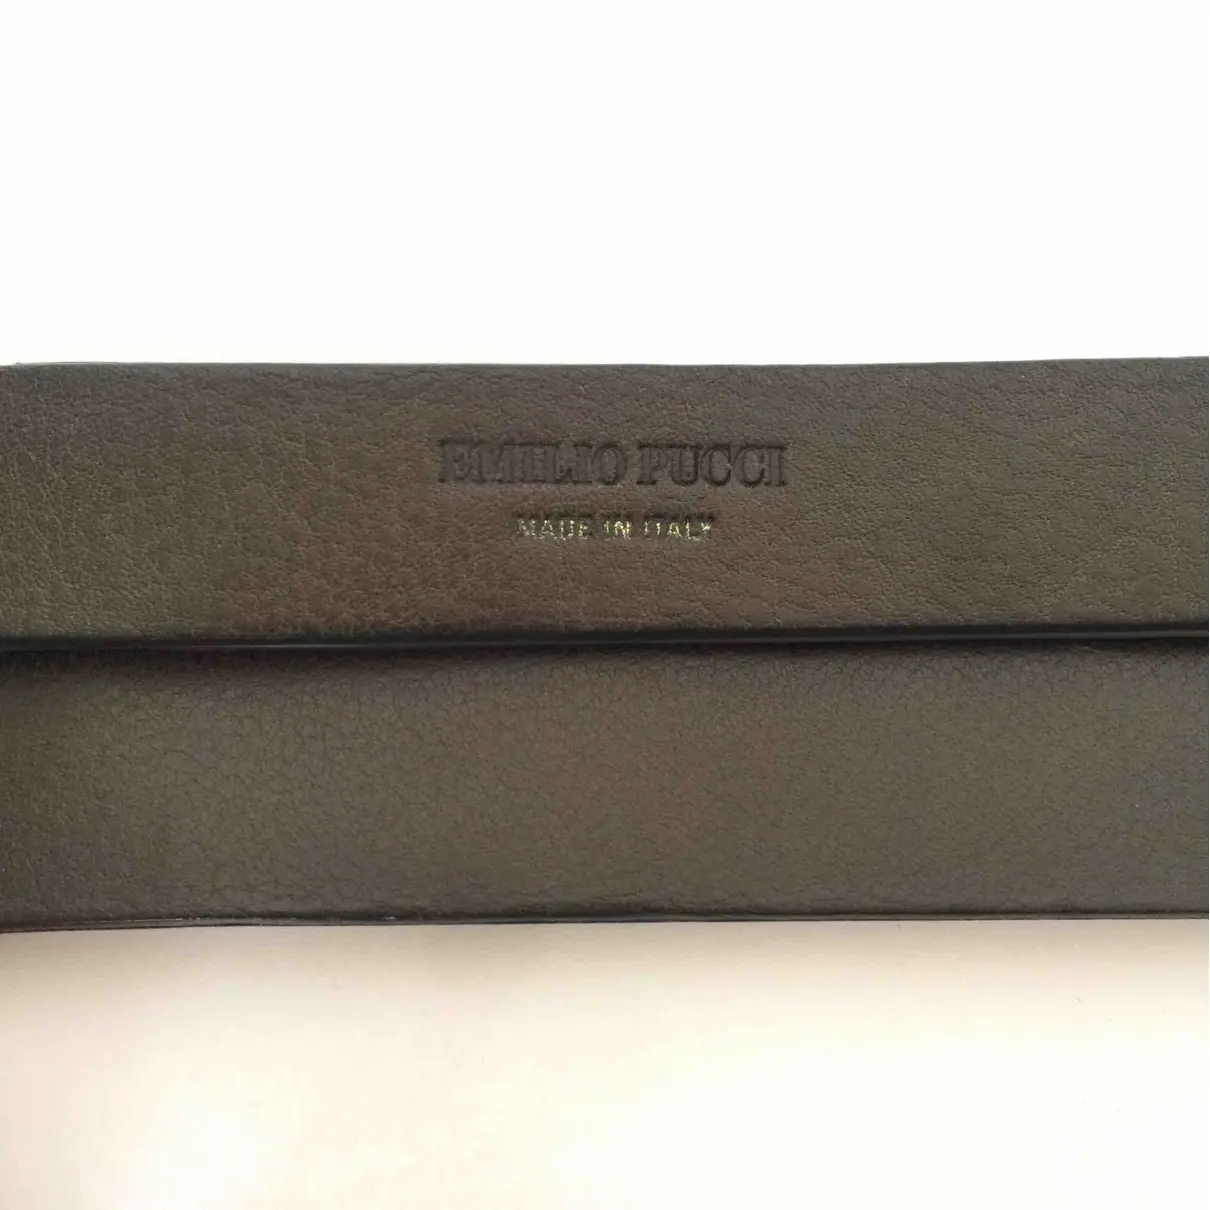 Buy Emilio Pucci Leather belt online